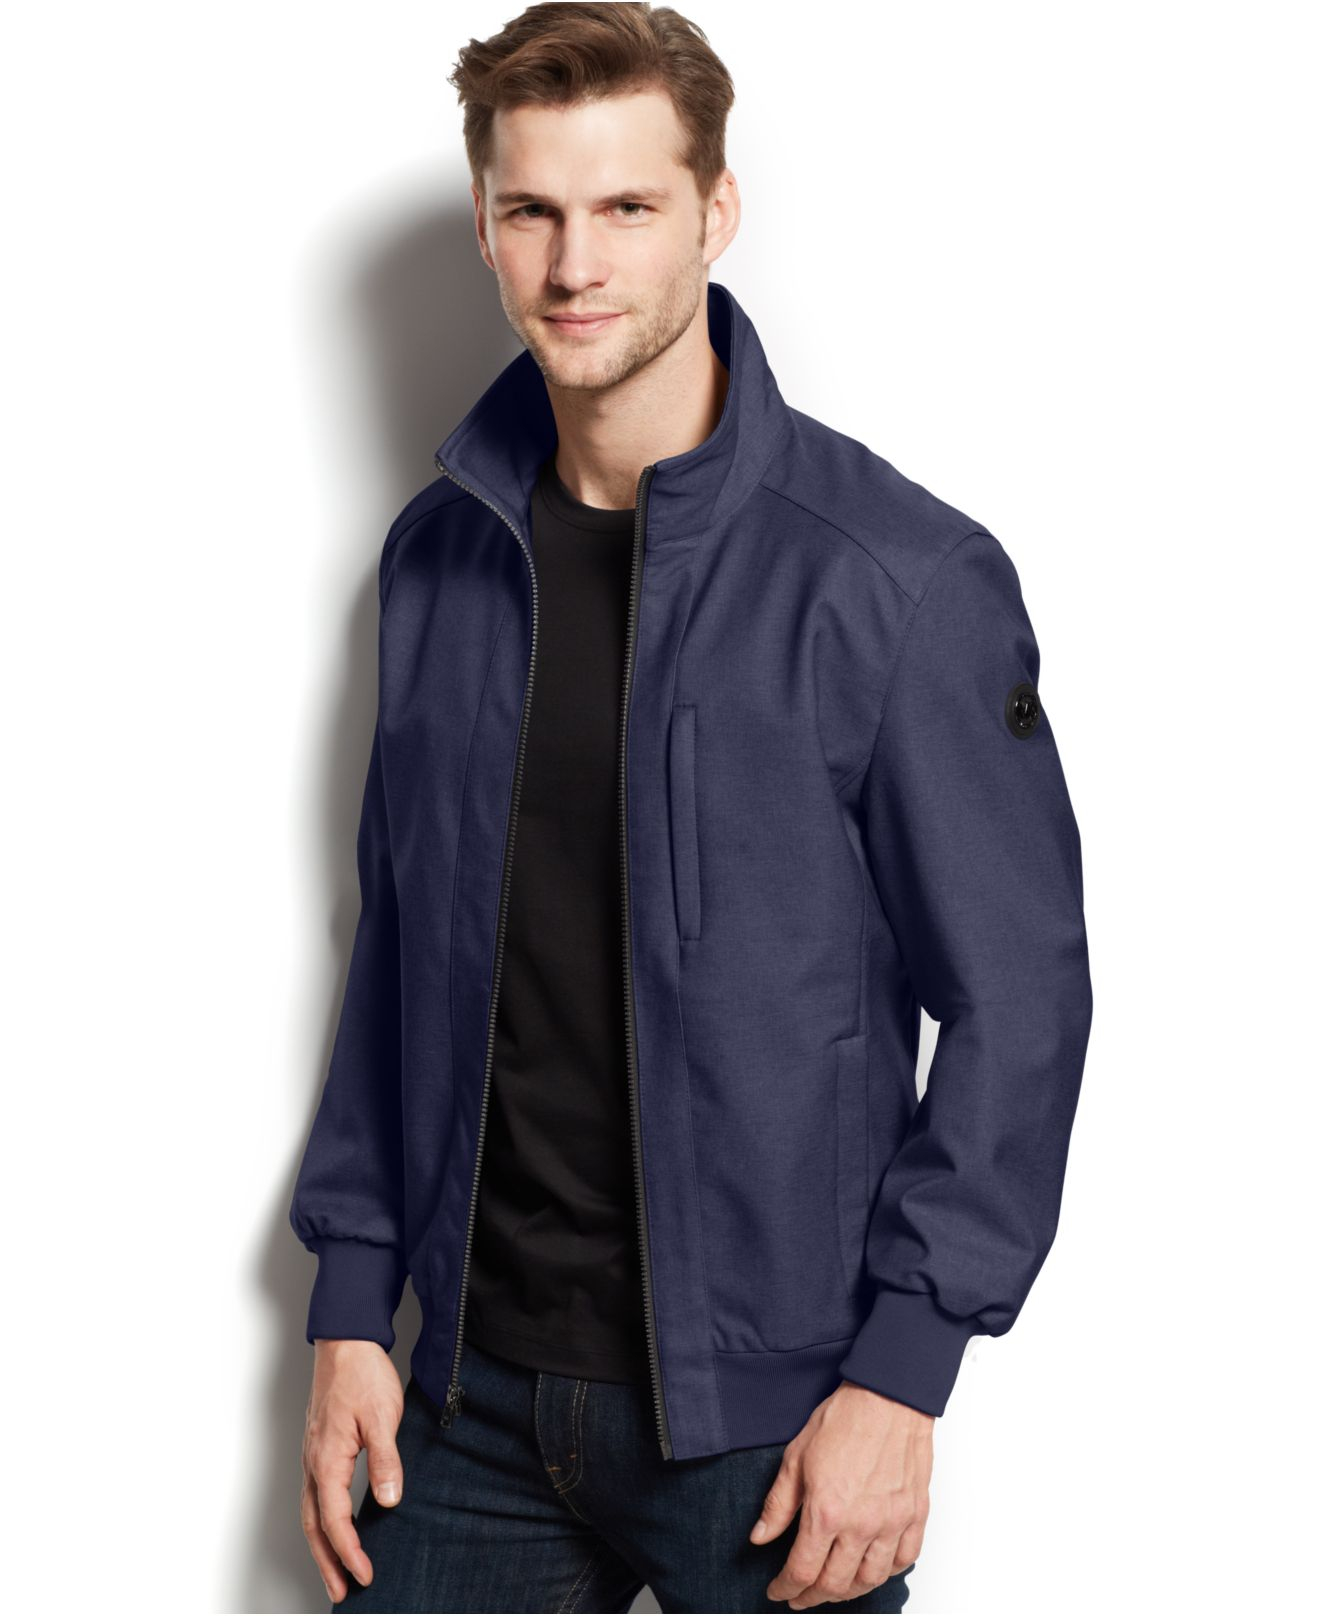 Michael Kors Michael Berlin Full-Zip Soft-Shell Jacket in Navy Heather  (Blue) for Men - Lyst